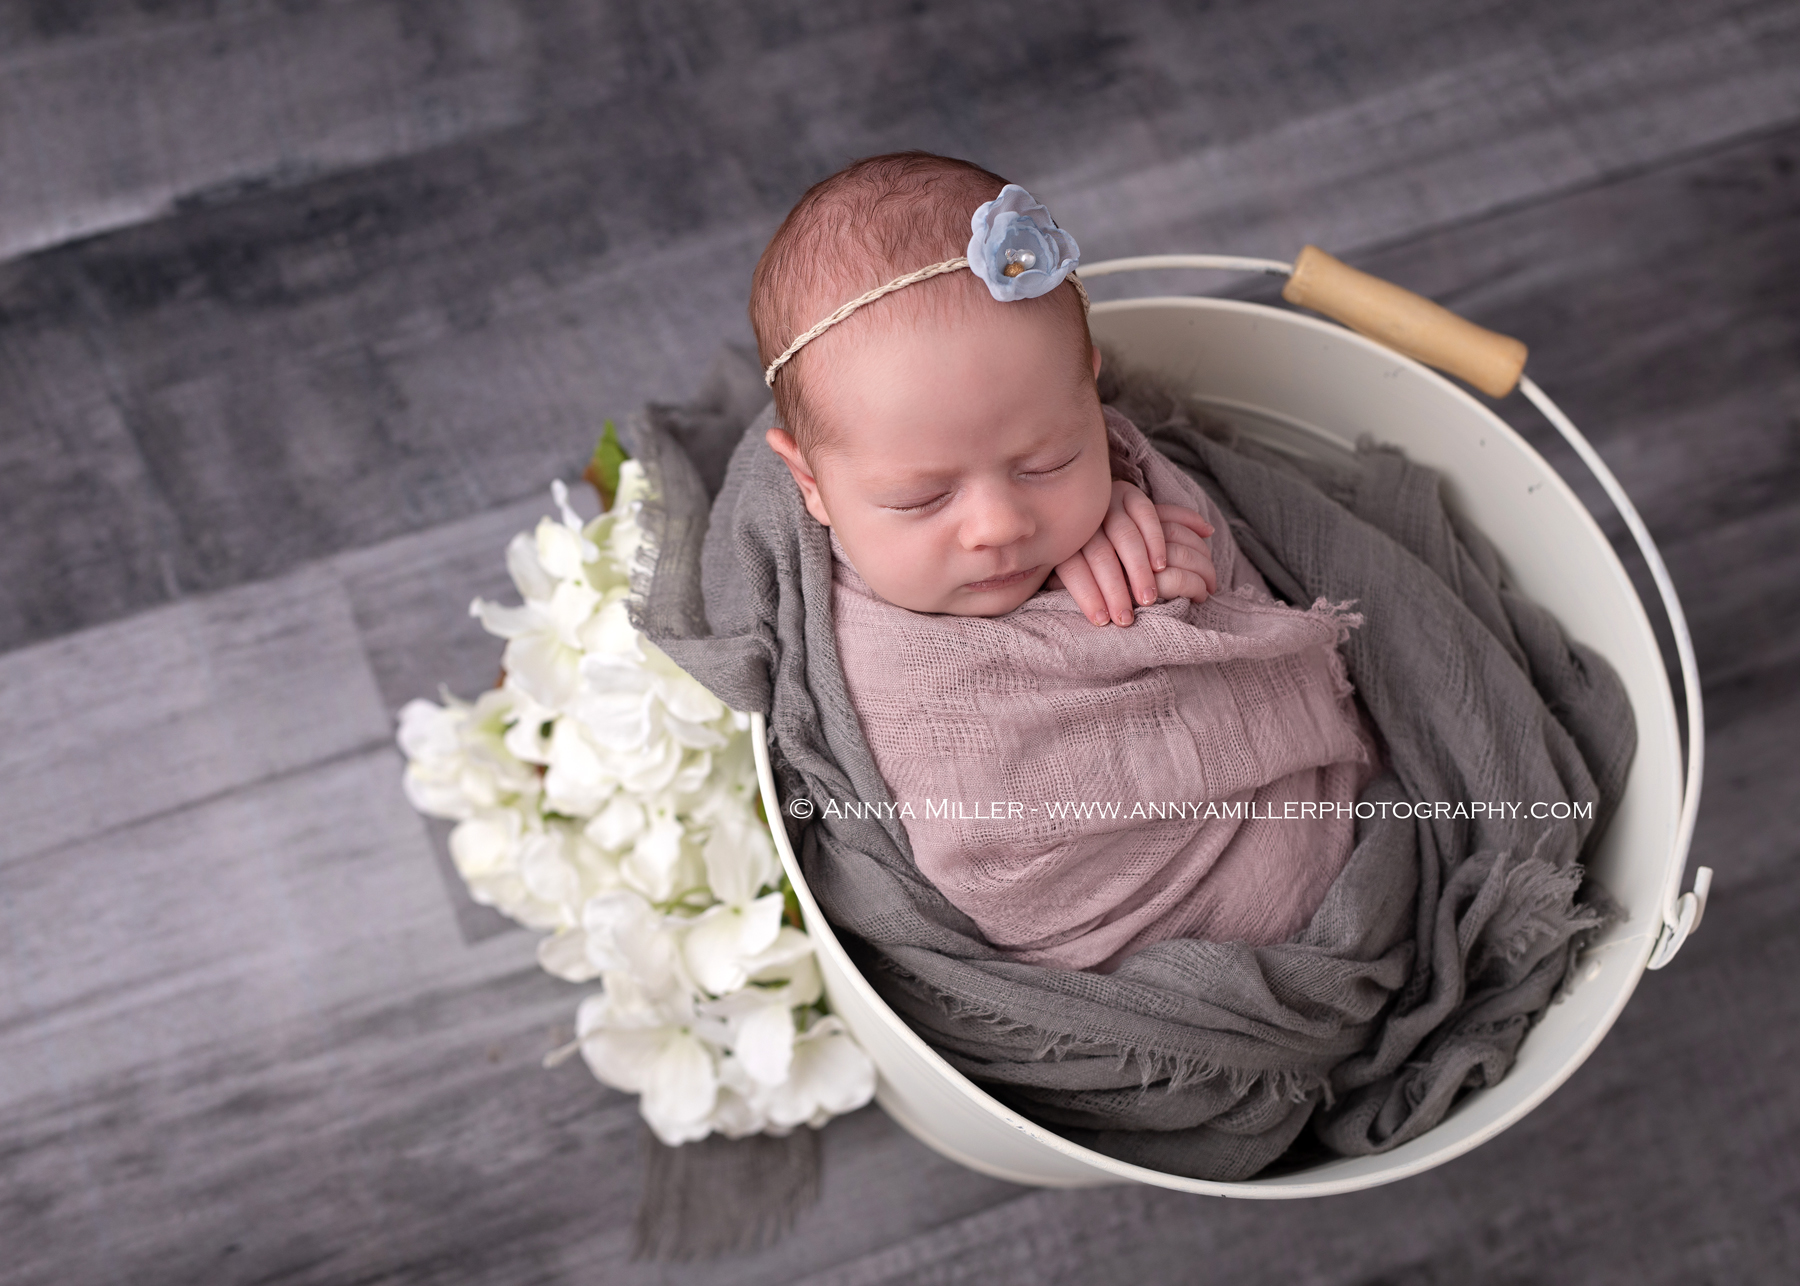 Newborn portraits by toronto area newborn photographer Annya Miller